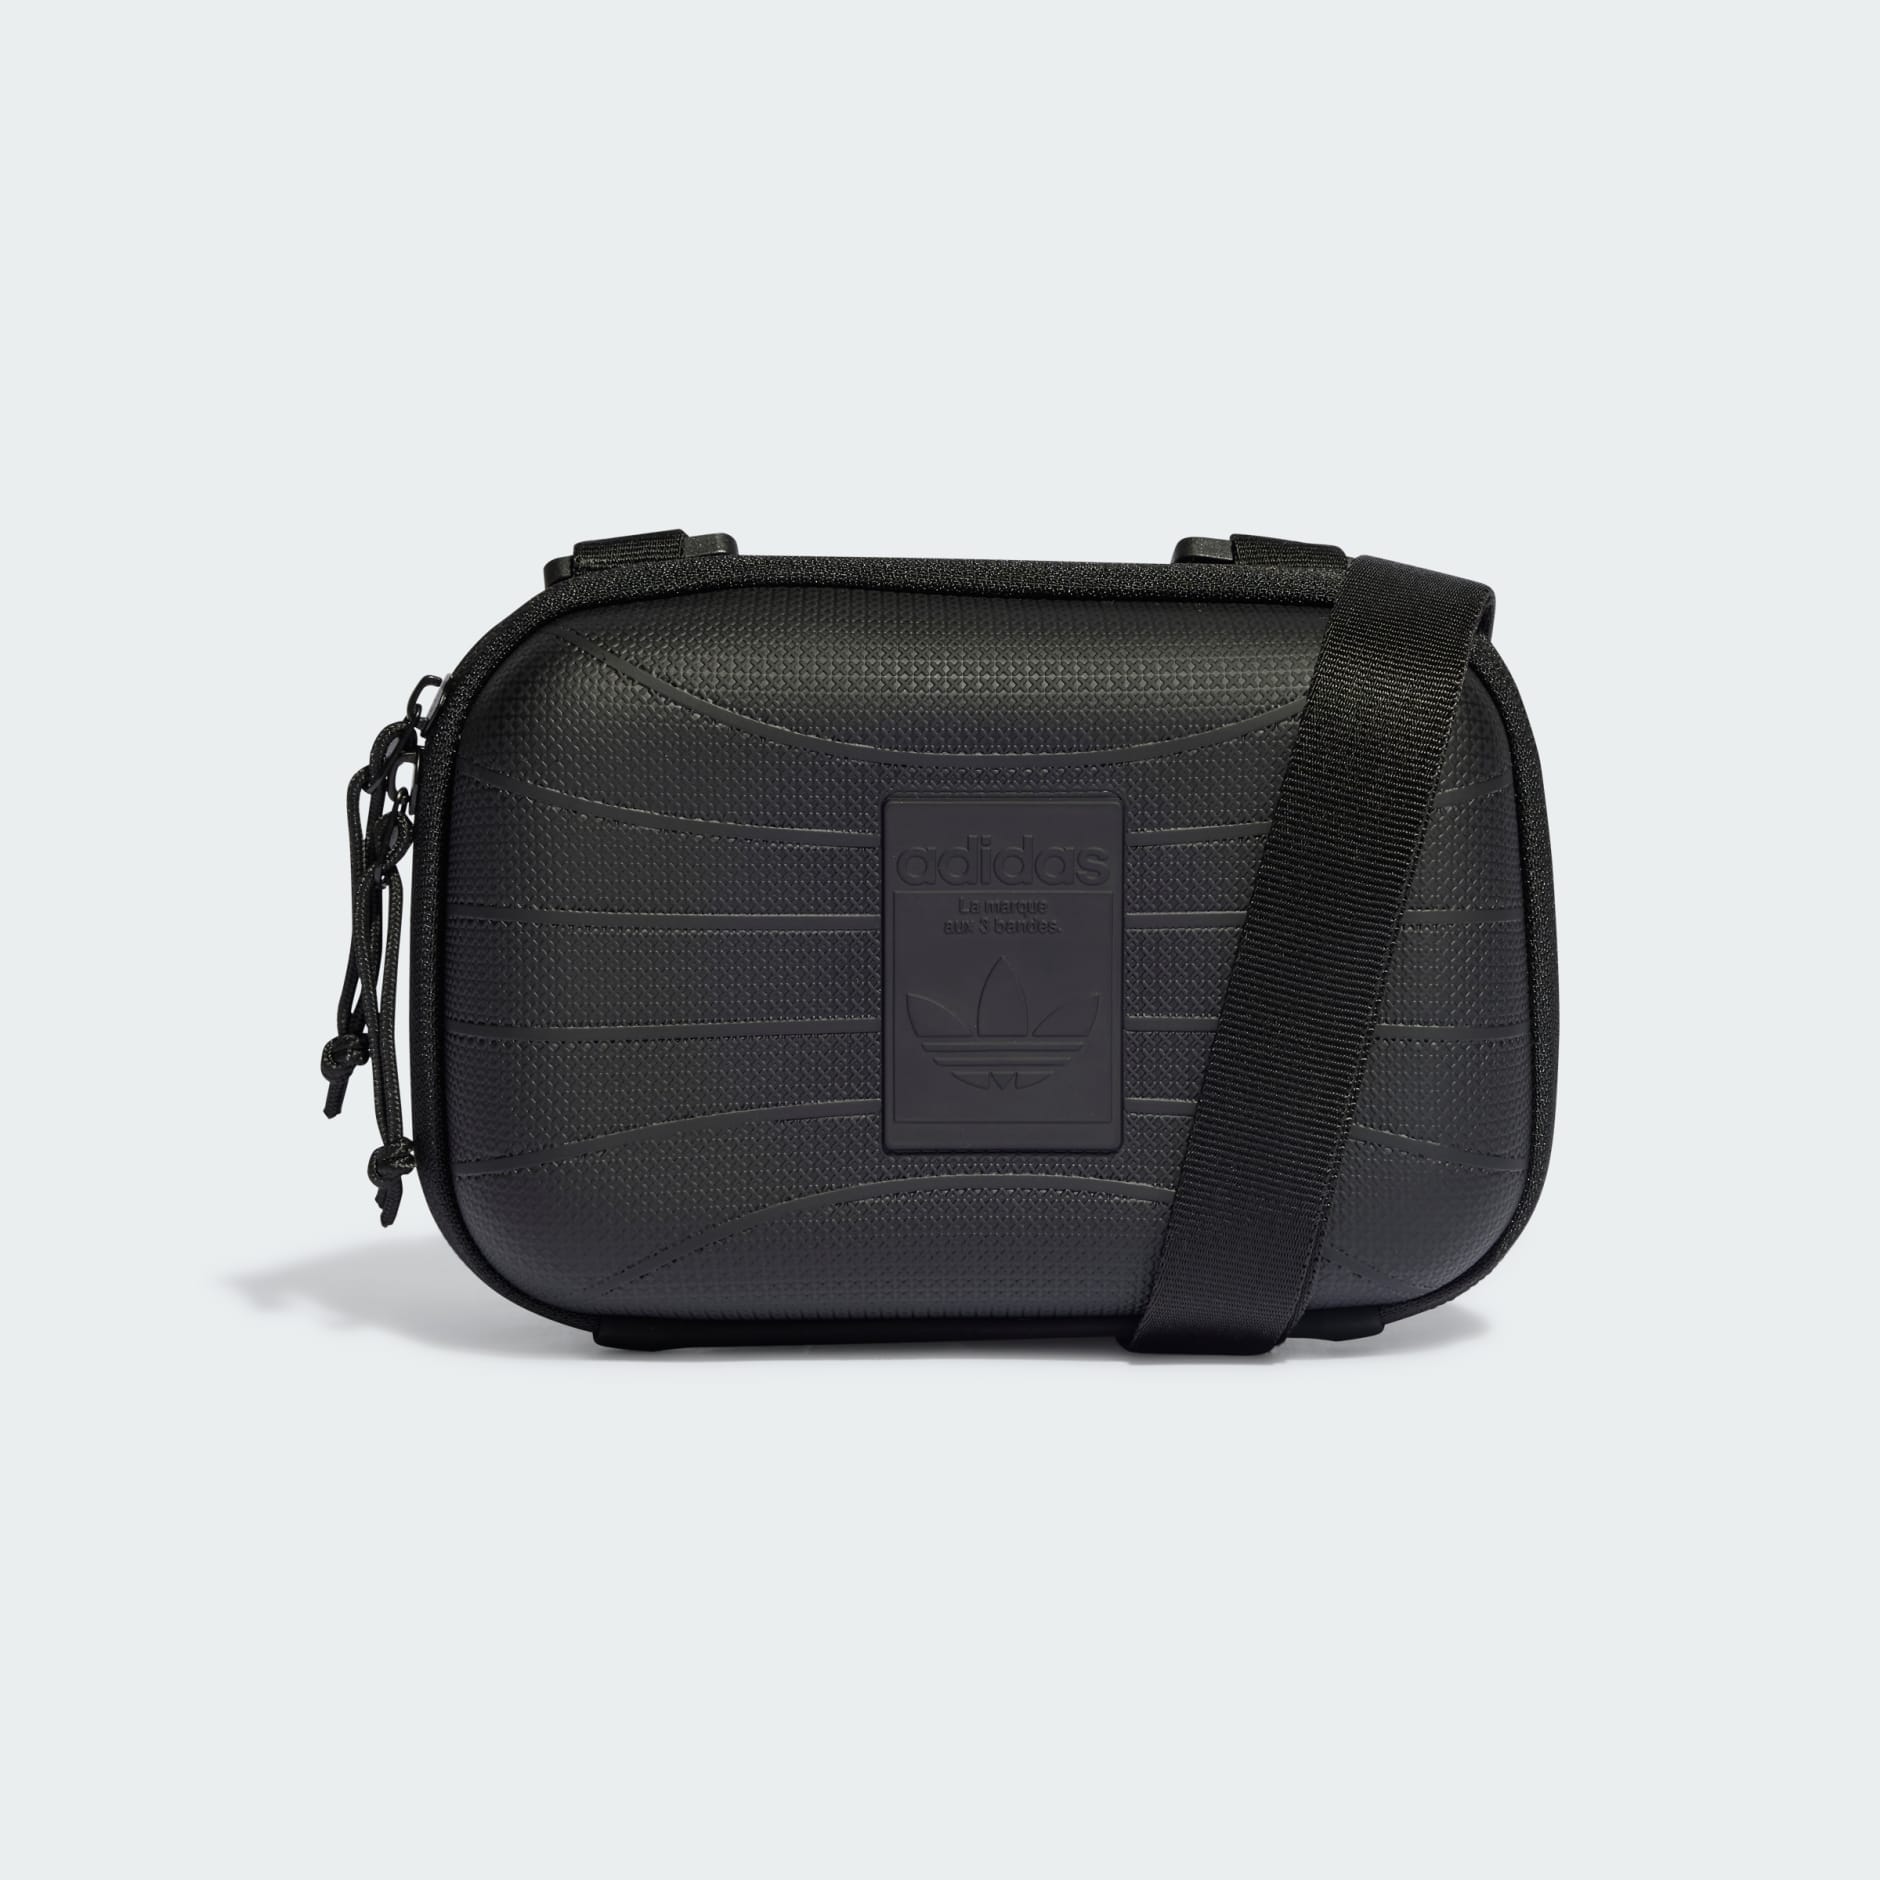 Adidas Cross Body Messenger Bag | Bags, Messenger bag, Adidas bags